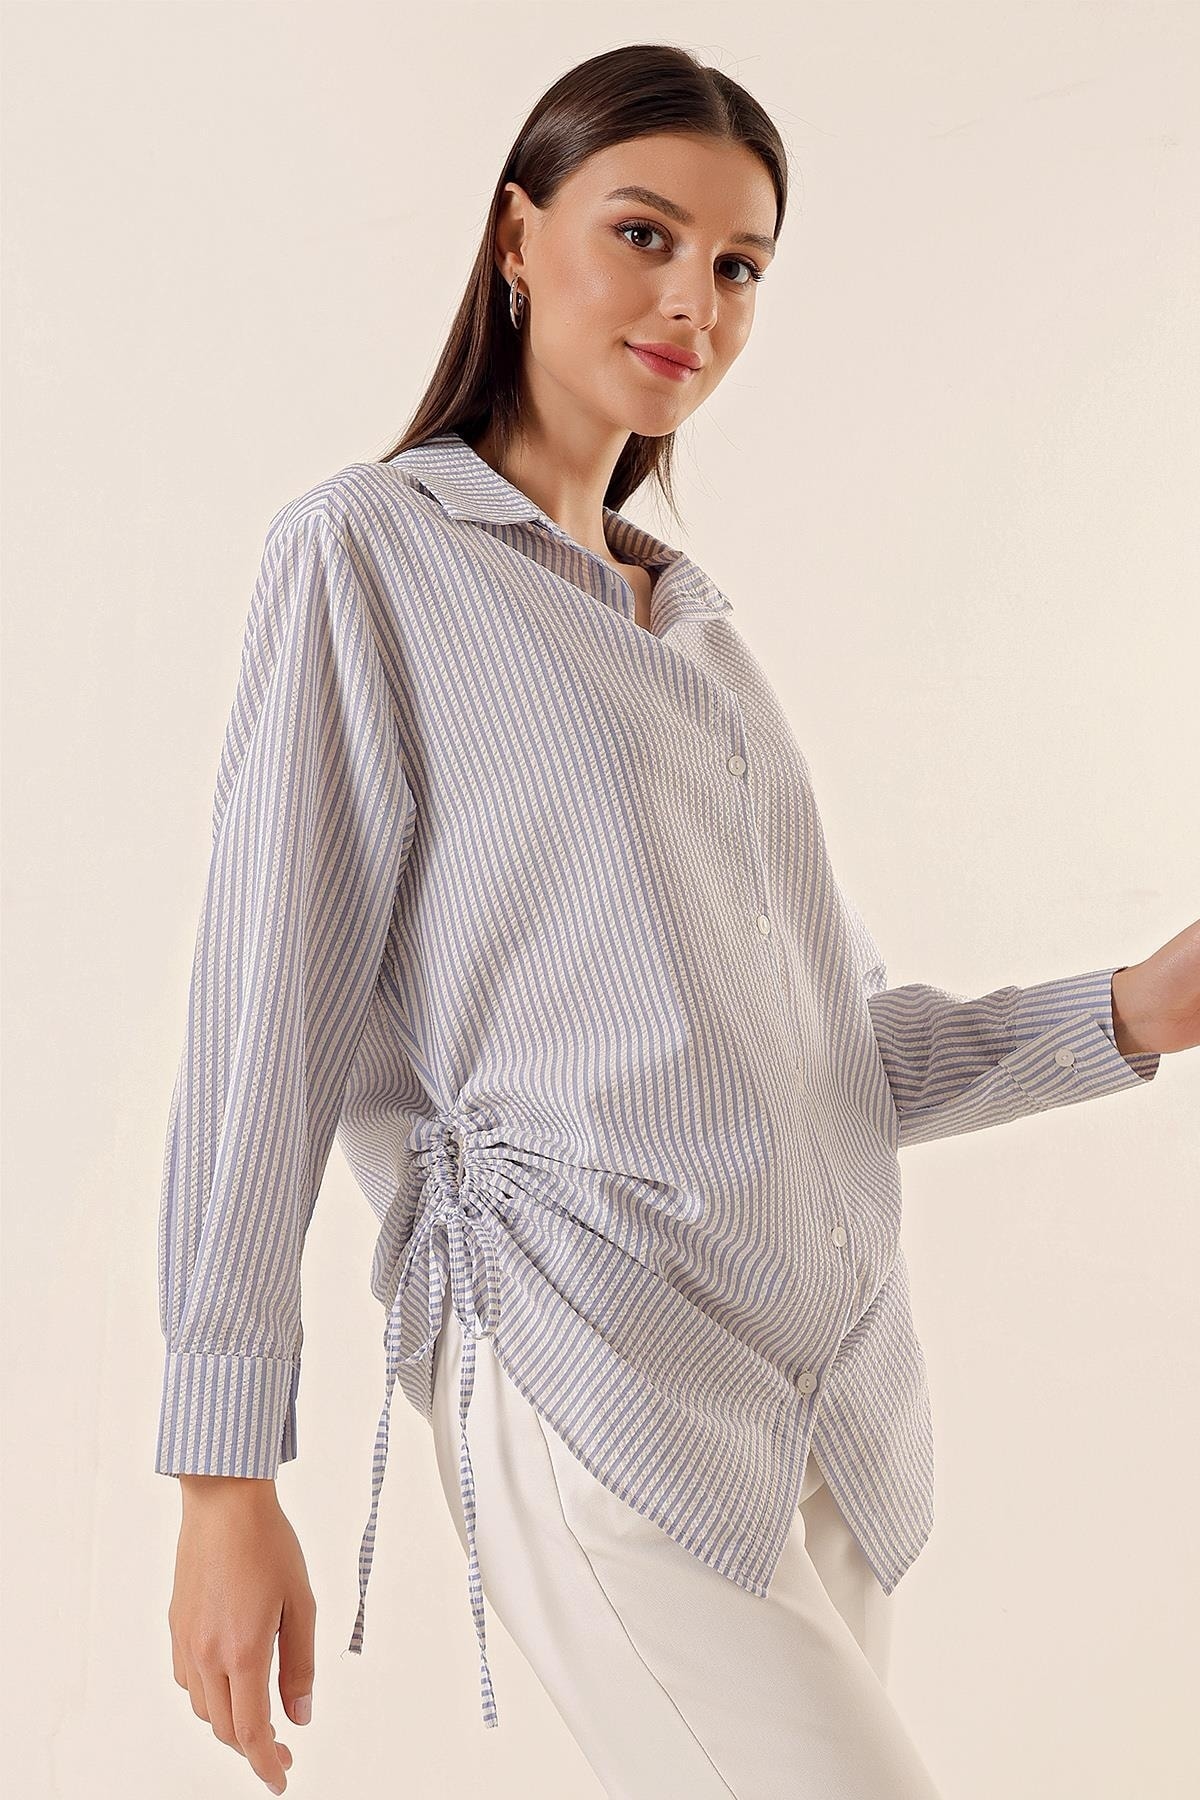 Levně By Saygı Longitudinal Stripe with Drawstrings at the side seersucker Tunic Shirt Blue